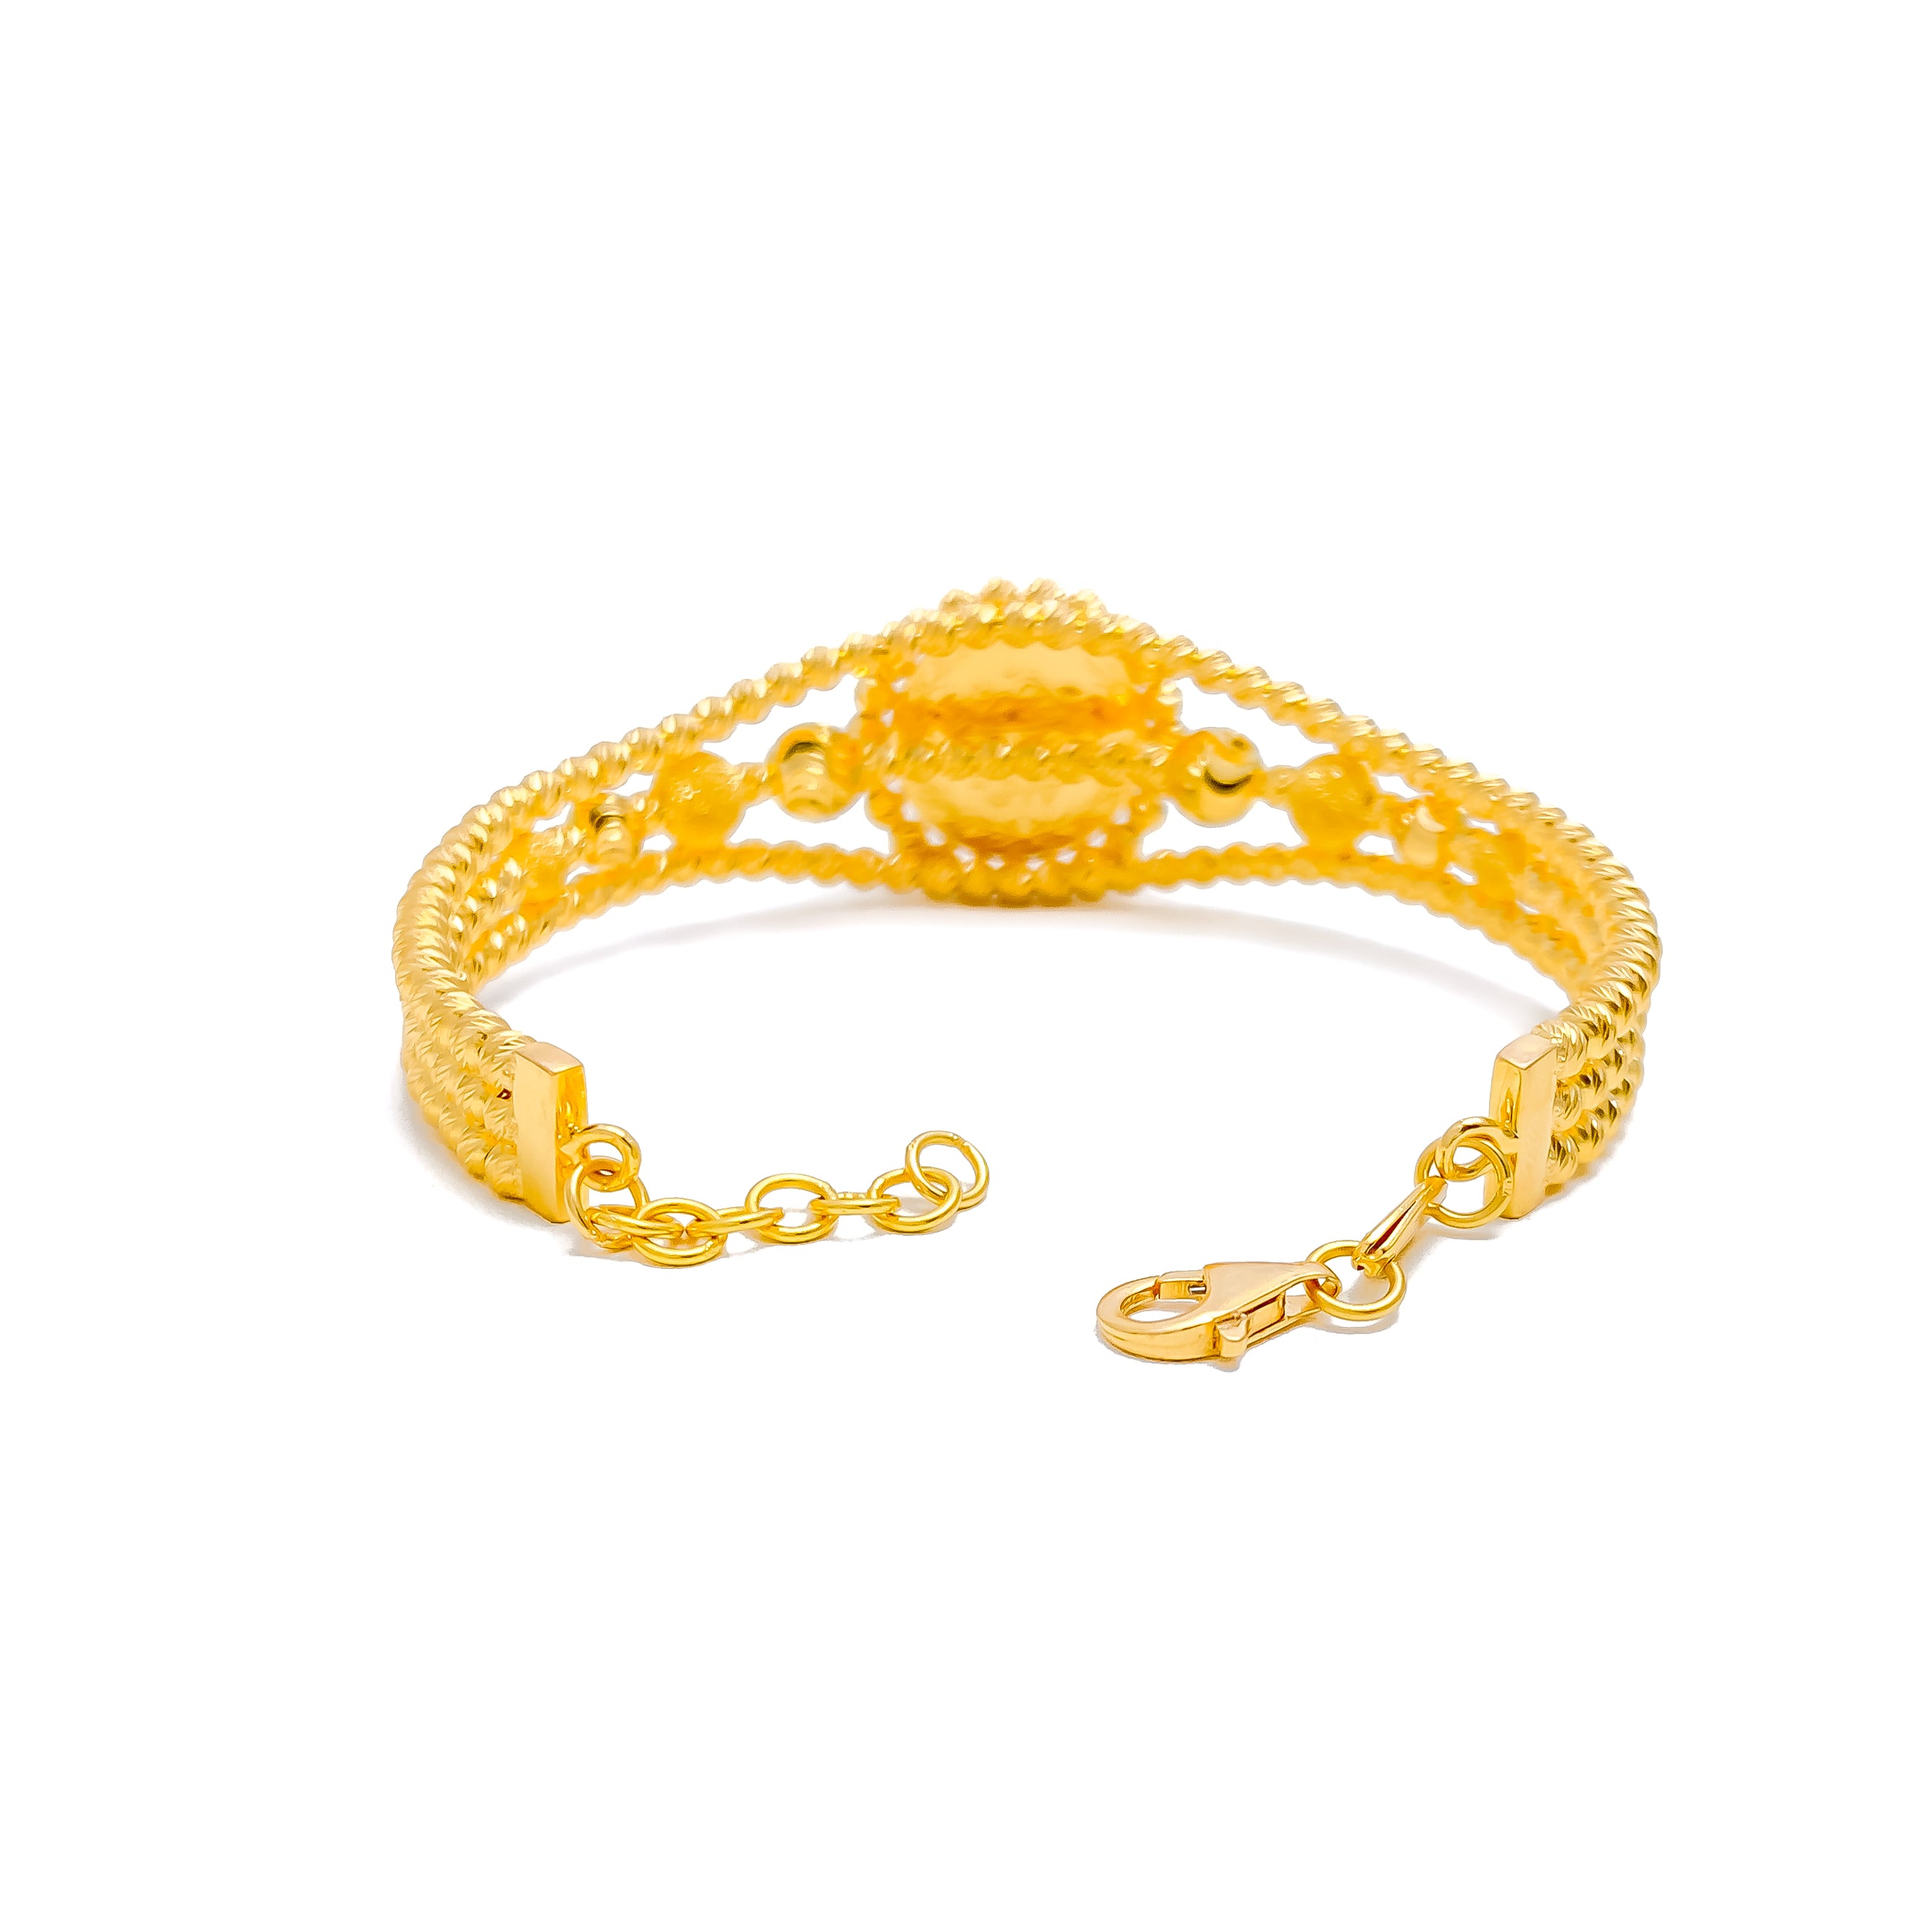 Gorgeous Etched 21k Gold  Bangle Bracelet